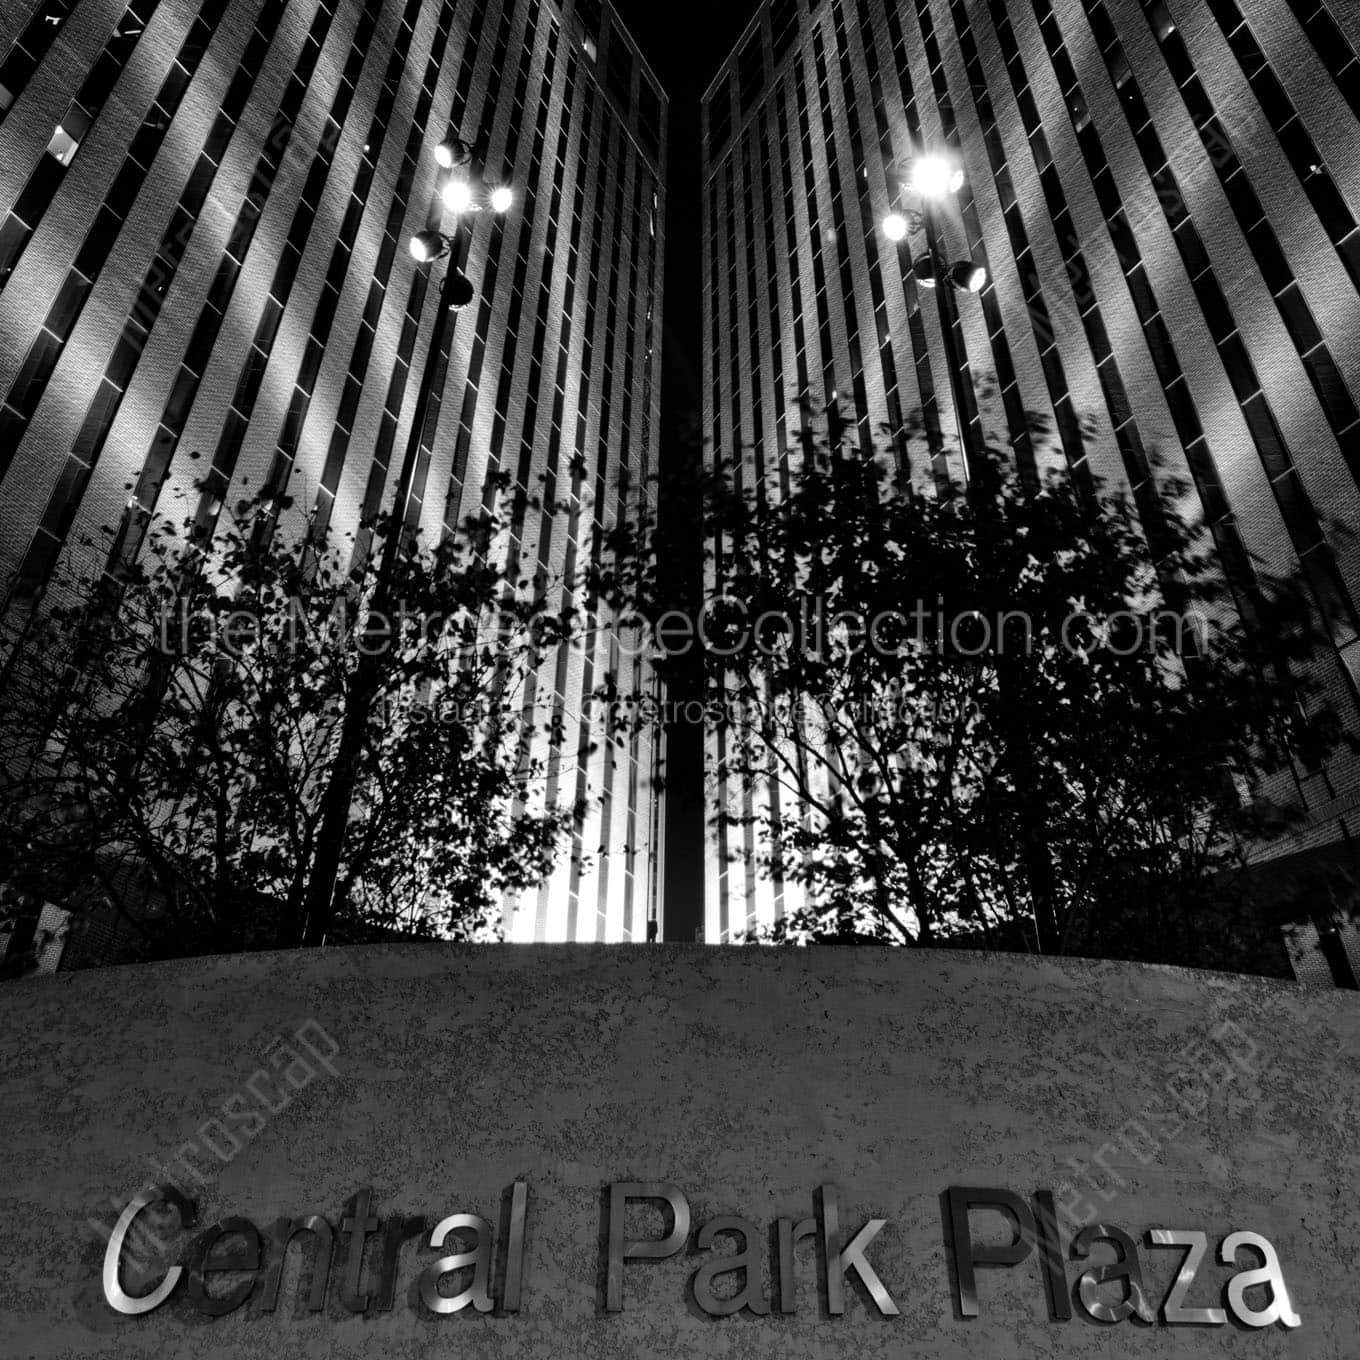 omaha central park plaza Black & White Wall Art